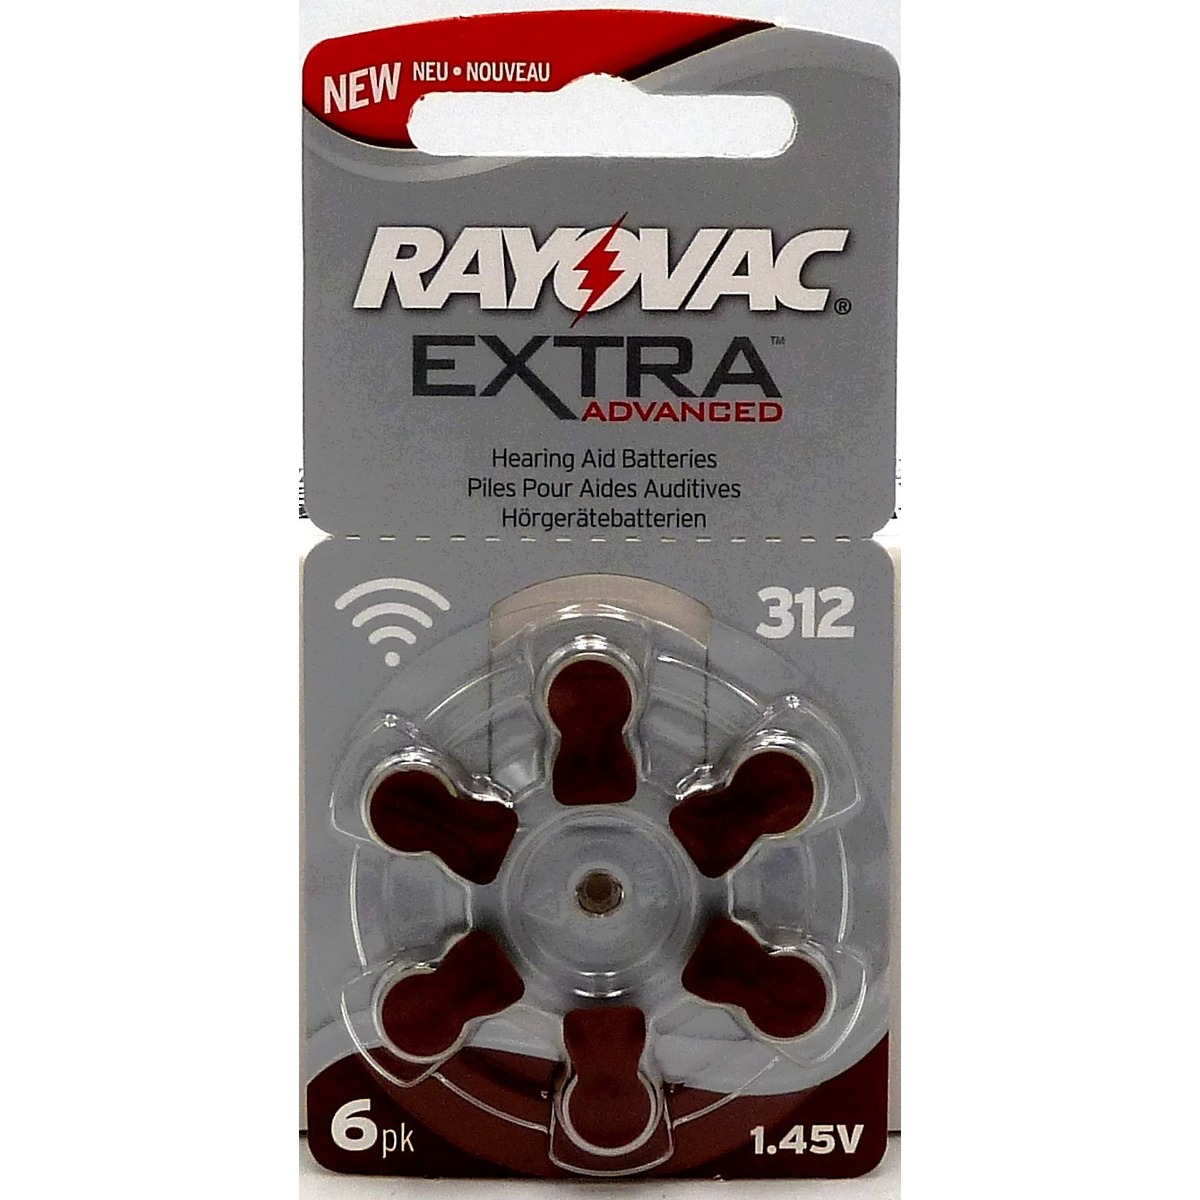 1 plaquette Rayovac Extra Advanced 312